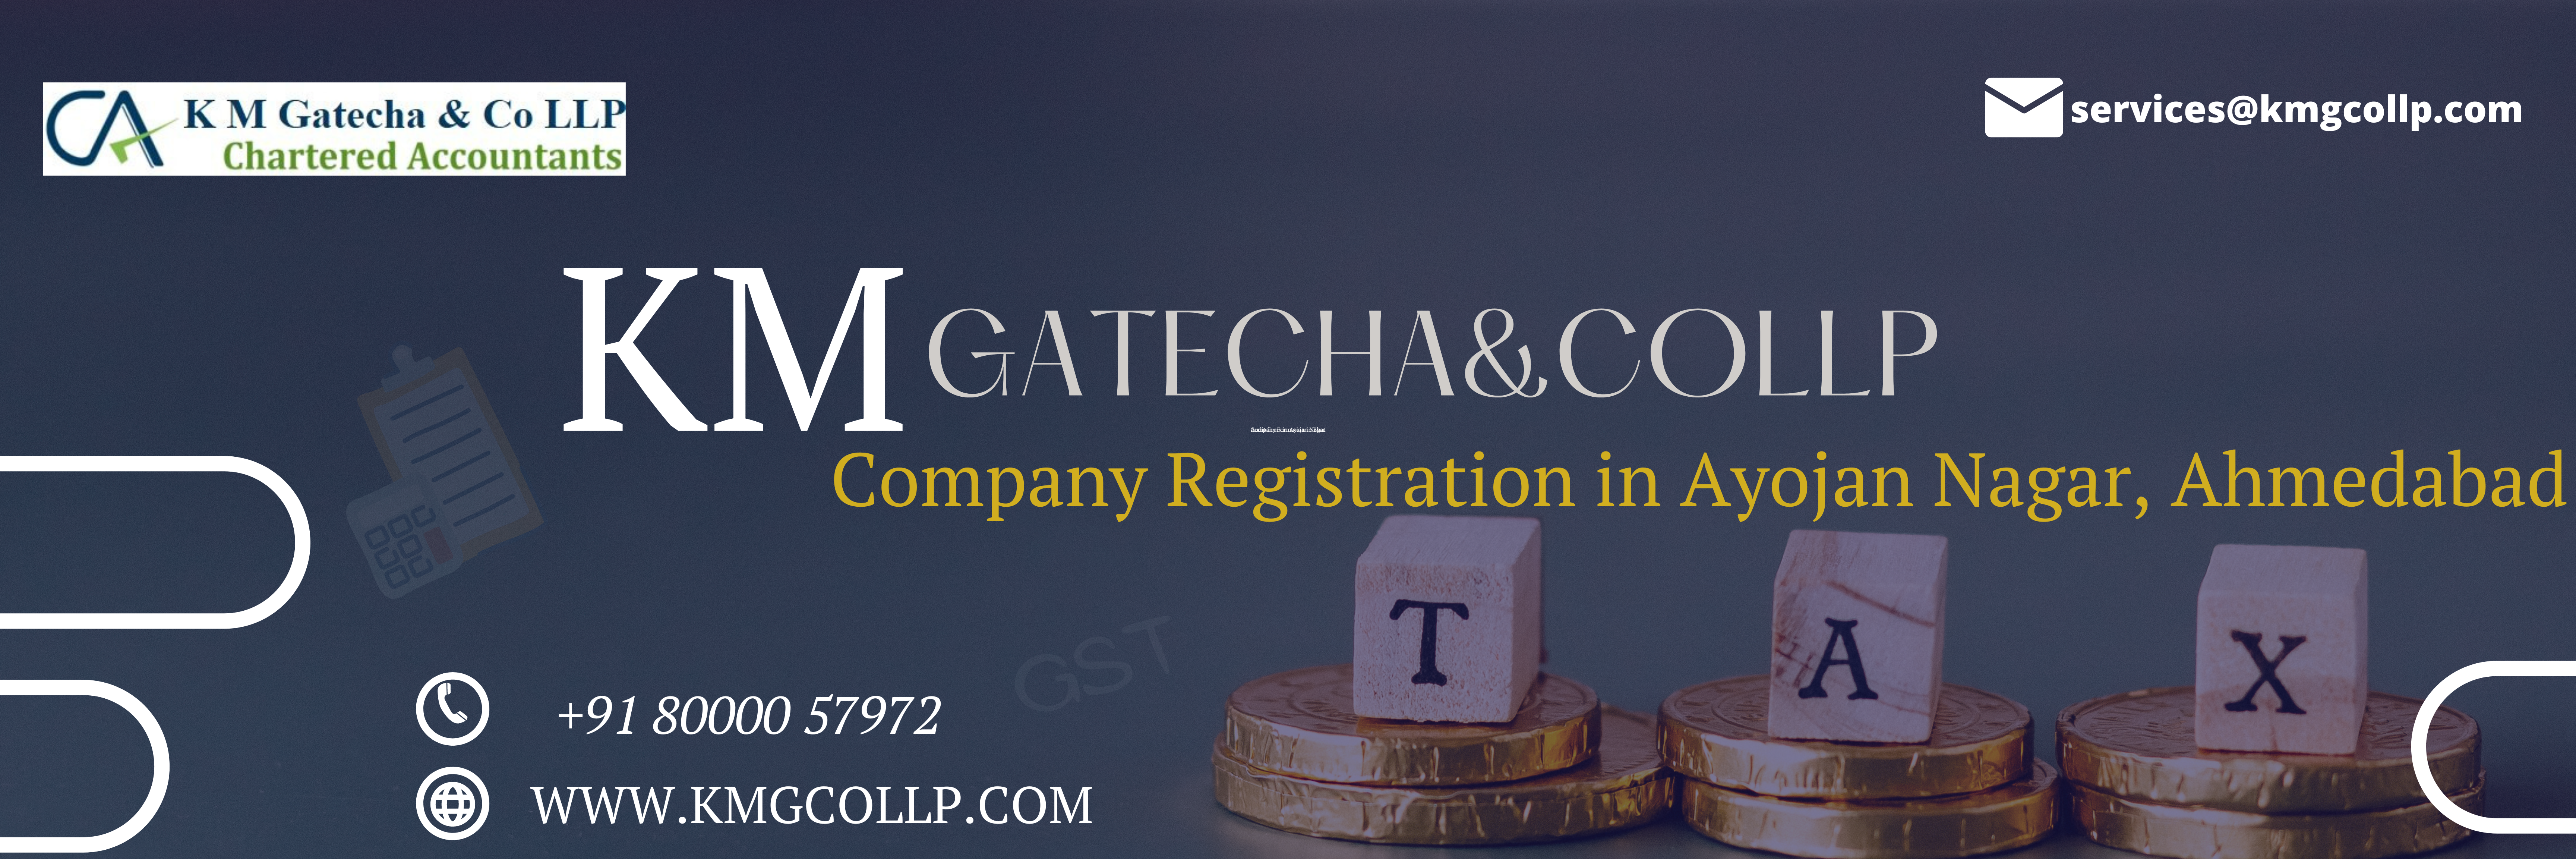 Company Registration in Ayojan Nagar, Ahmedabad